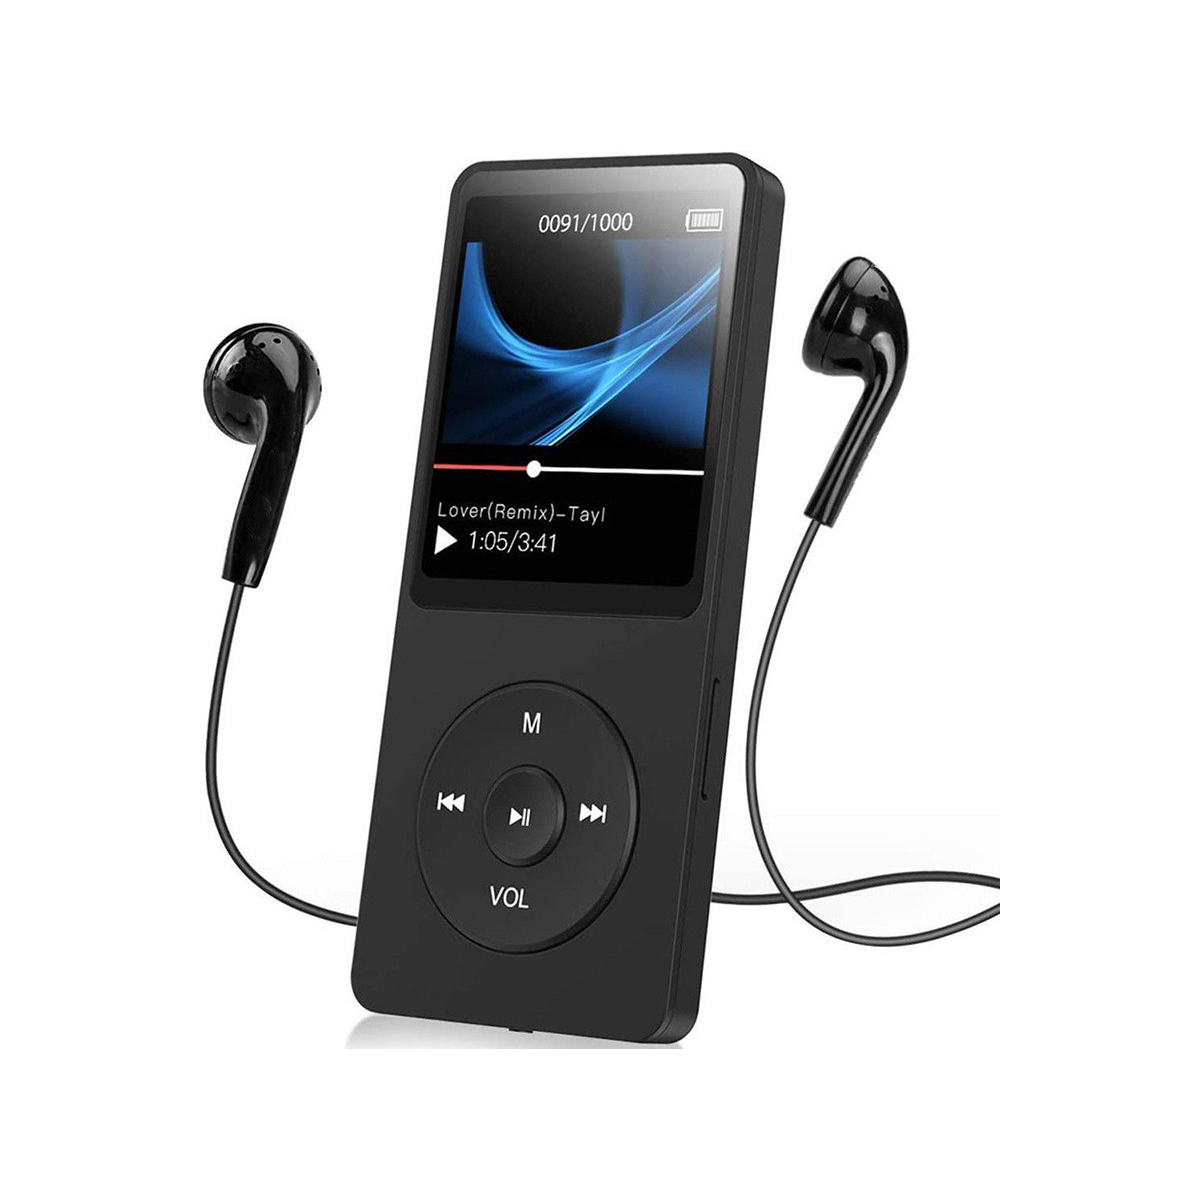 schwarz) (64 Player Bluetooth MP3 SYNTEK Walkman GB, Walkman Player Edition MP3/MP4 Ebook Student Musikspieler